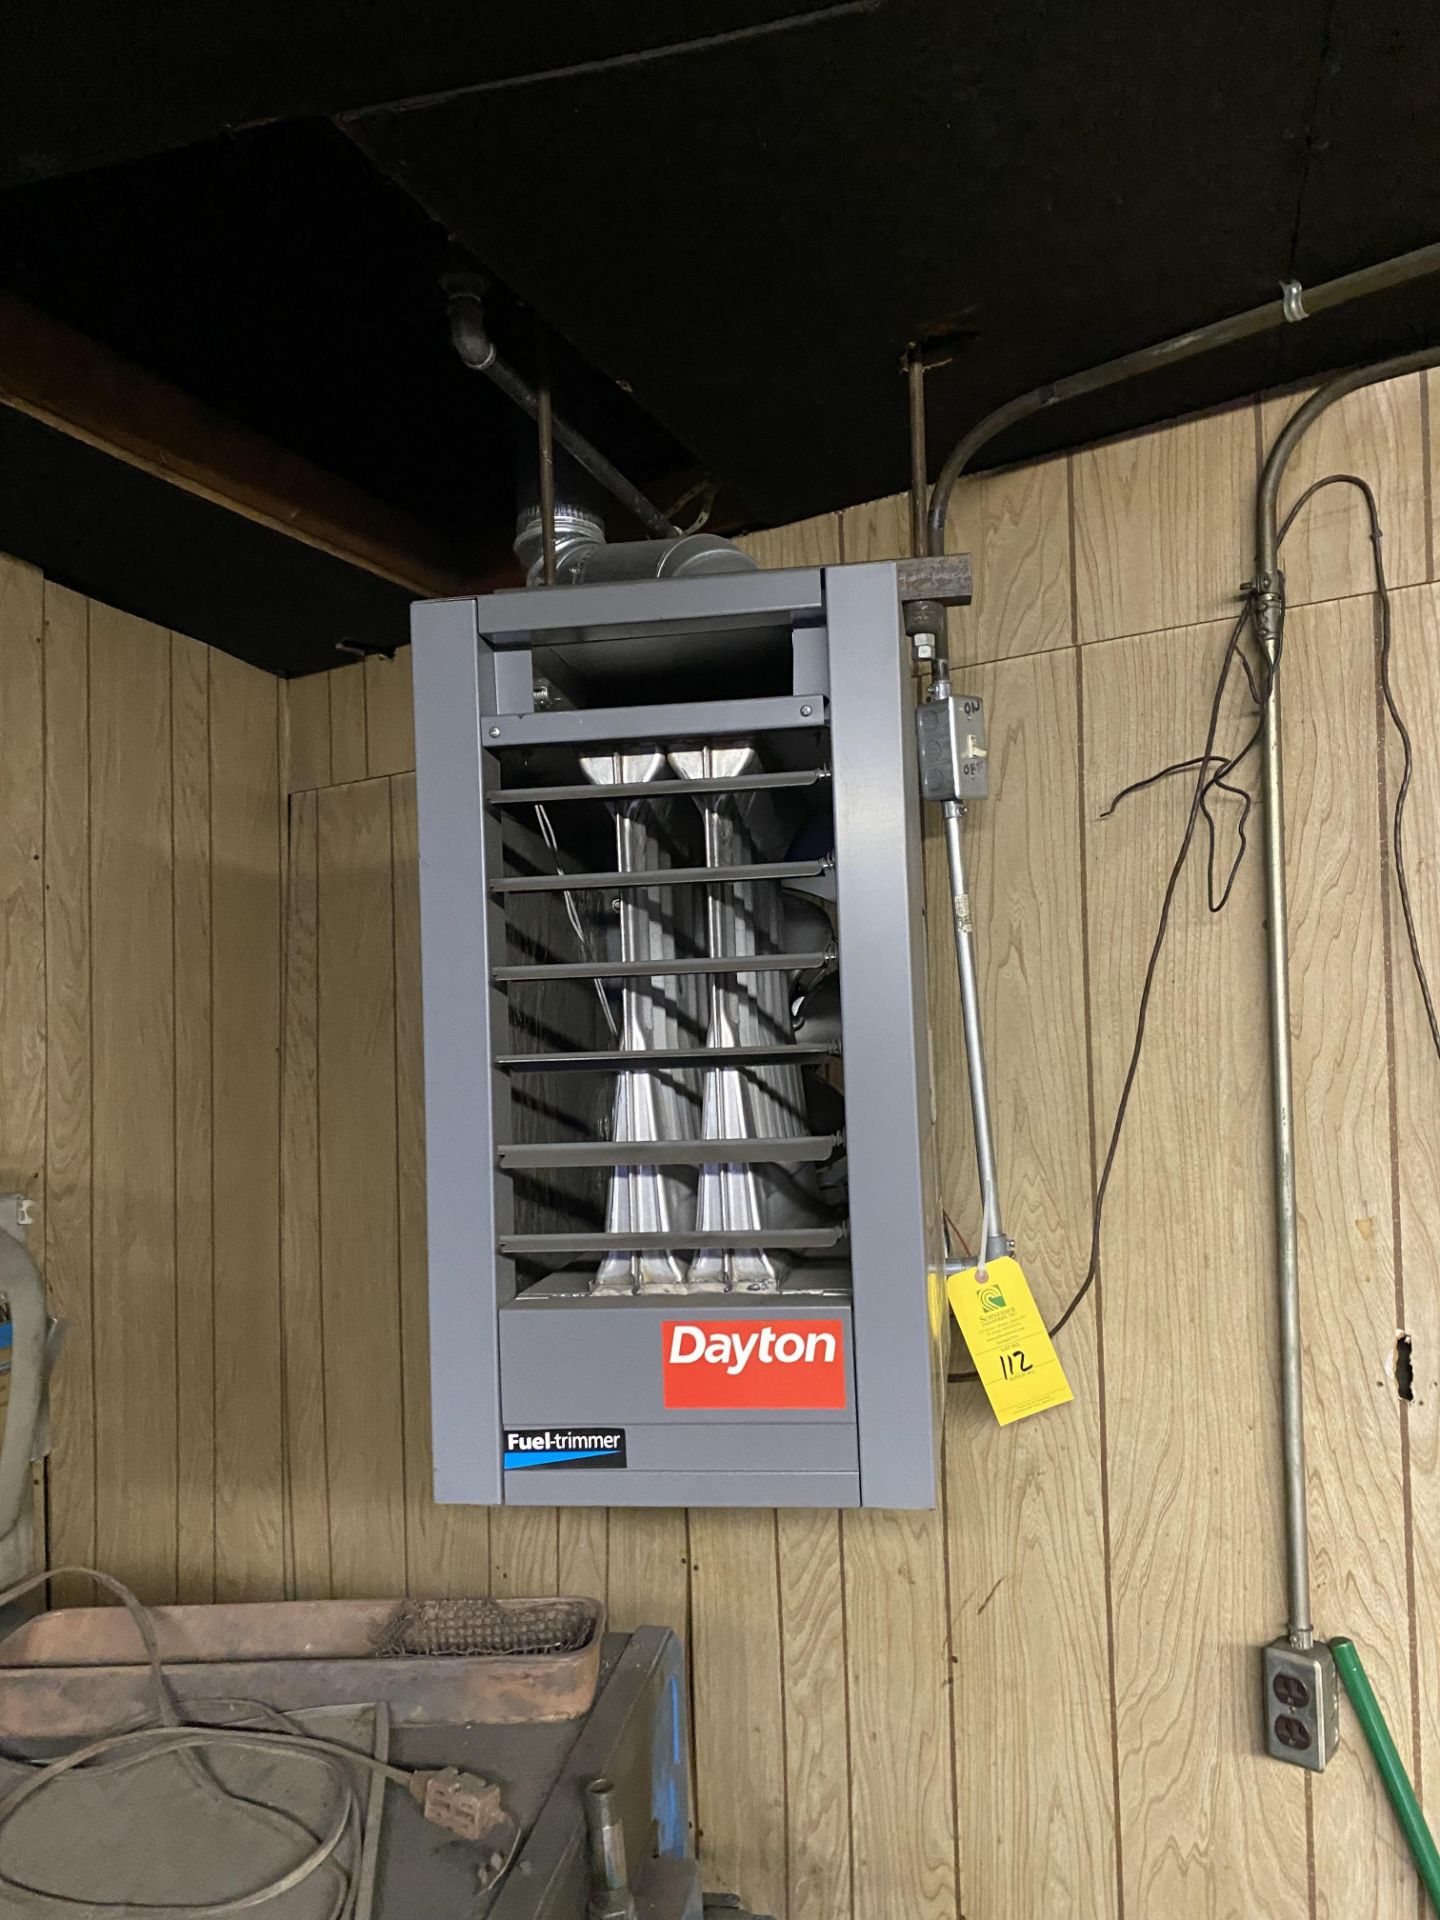 Dayton Space Heater, Rigging Fee: $50 - Image 2 of 3